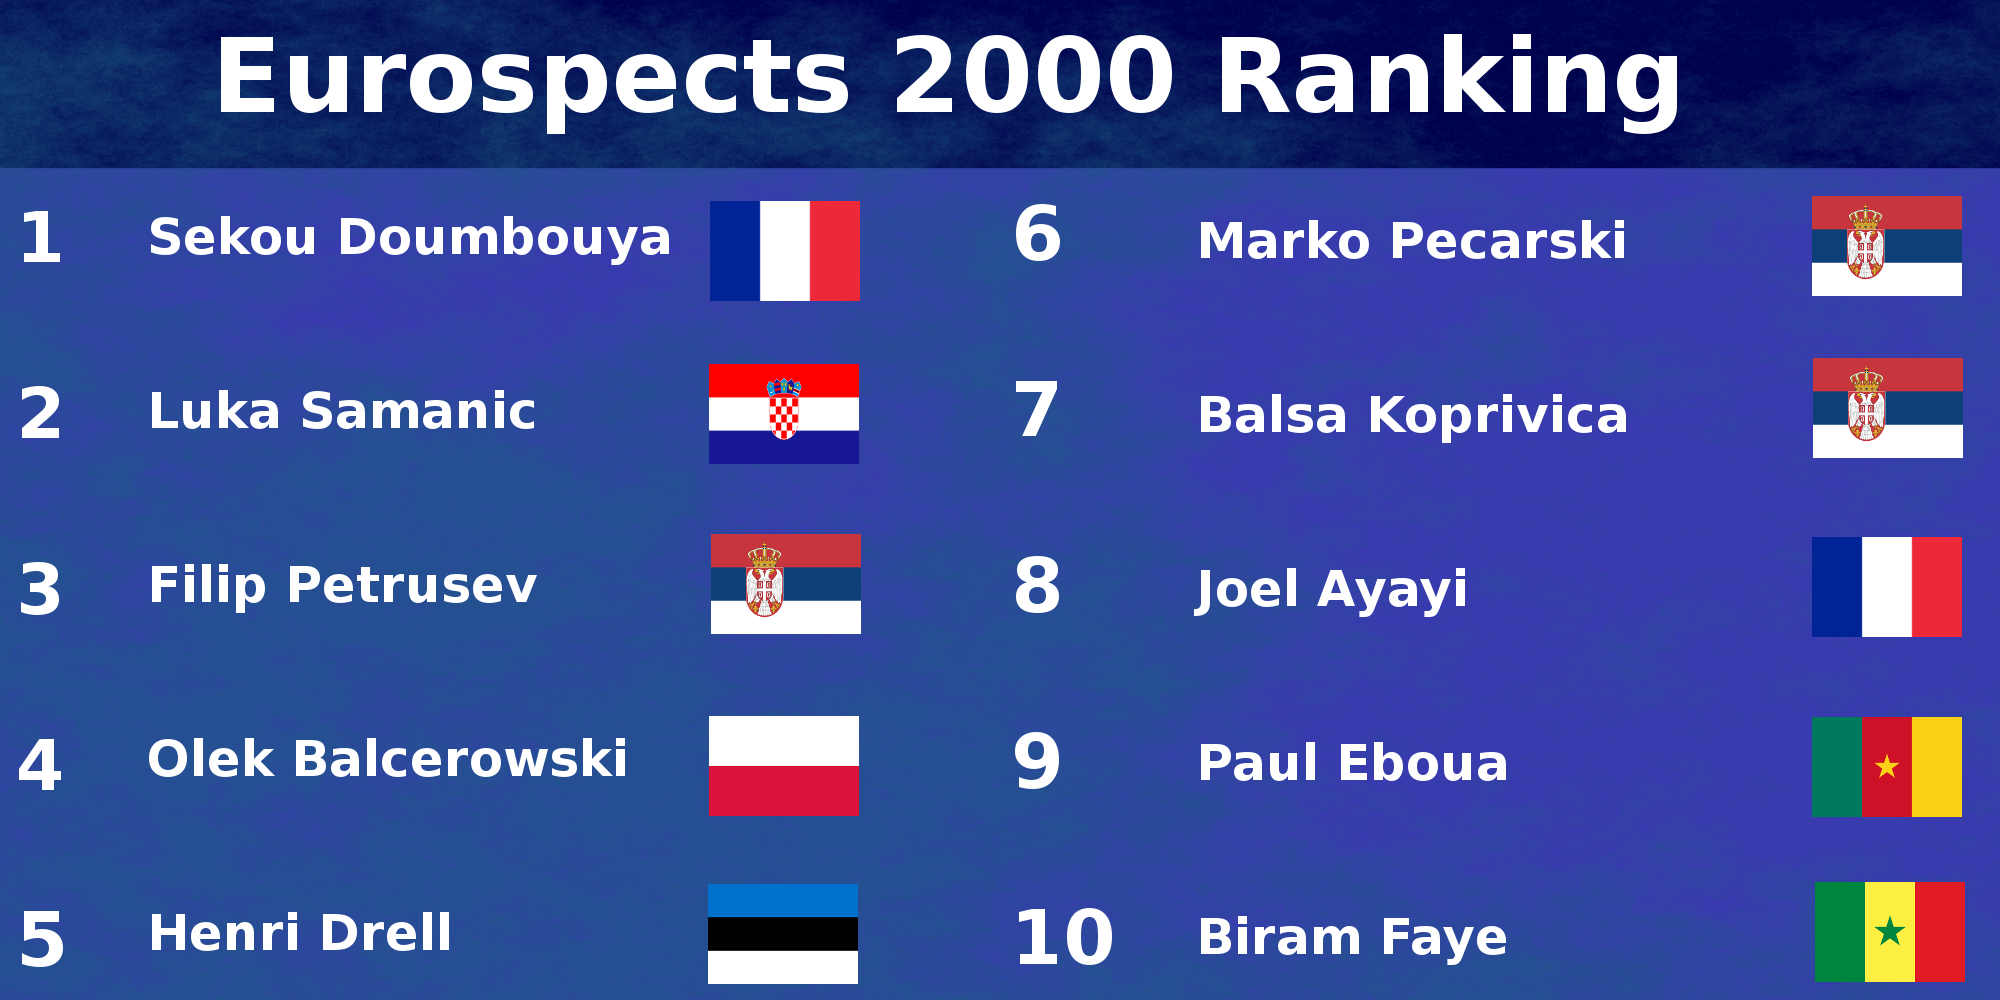 2000 & 2001 Generation Ranking Update Eurospects